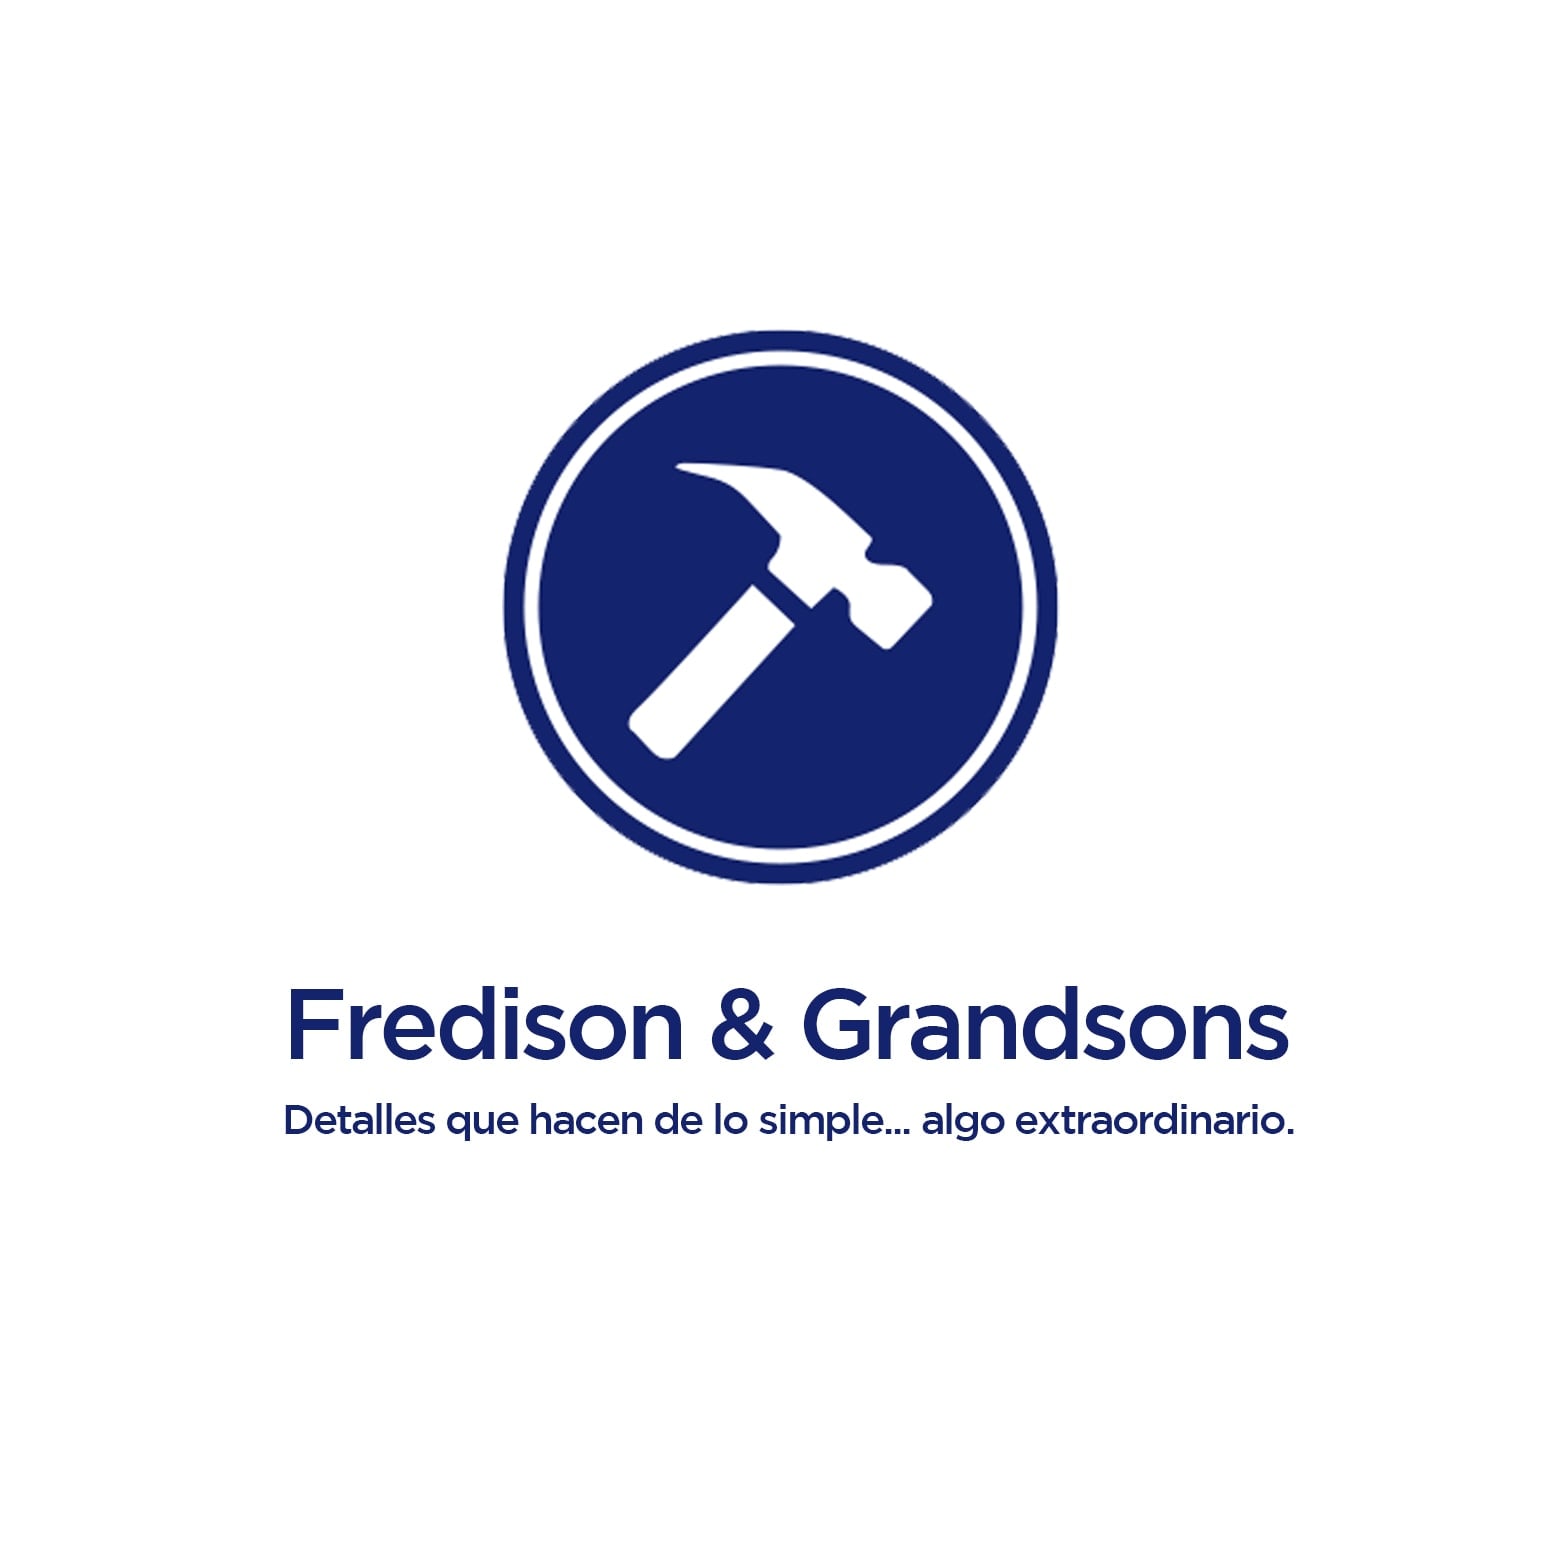 Fredison & Grandsons